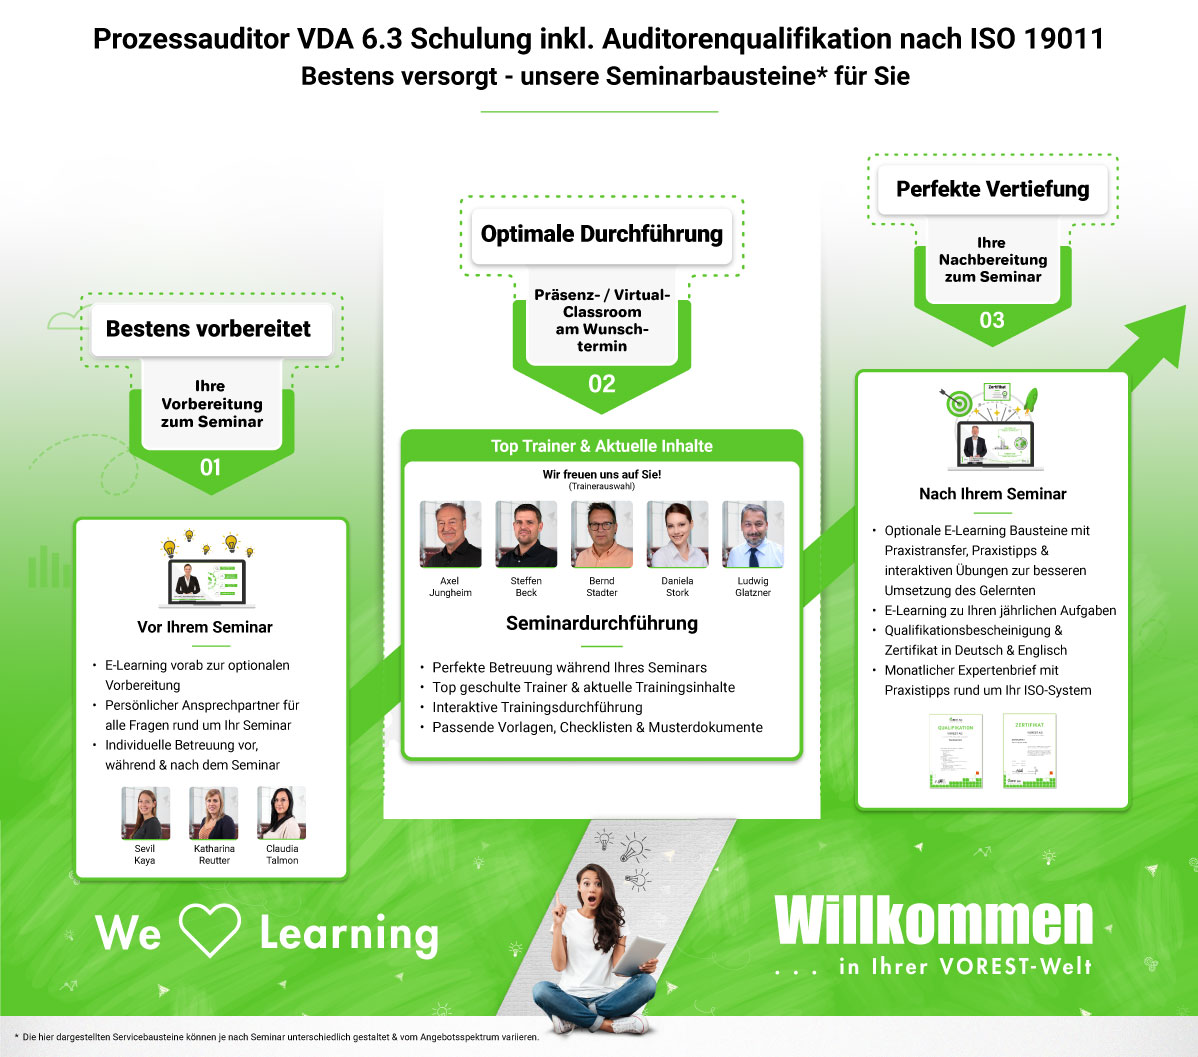 Prozessauditor VDA 6.3 Schulung inkl. Auditorenqualifikation nach ISO 19011